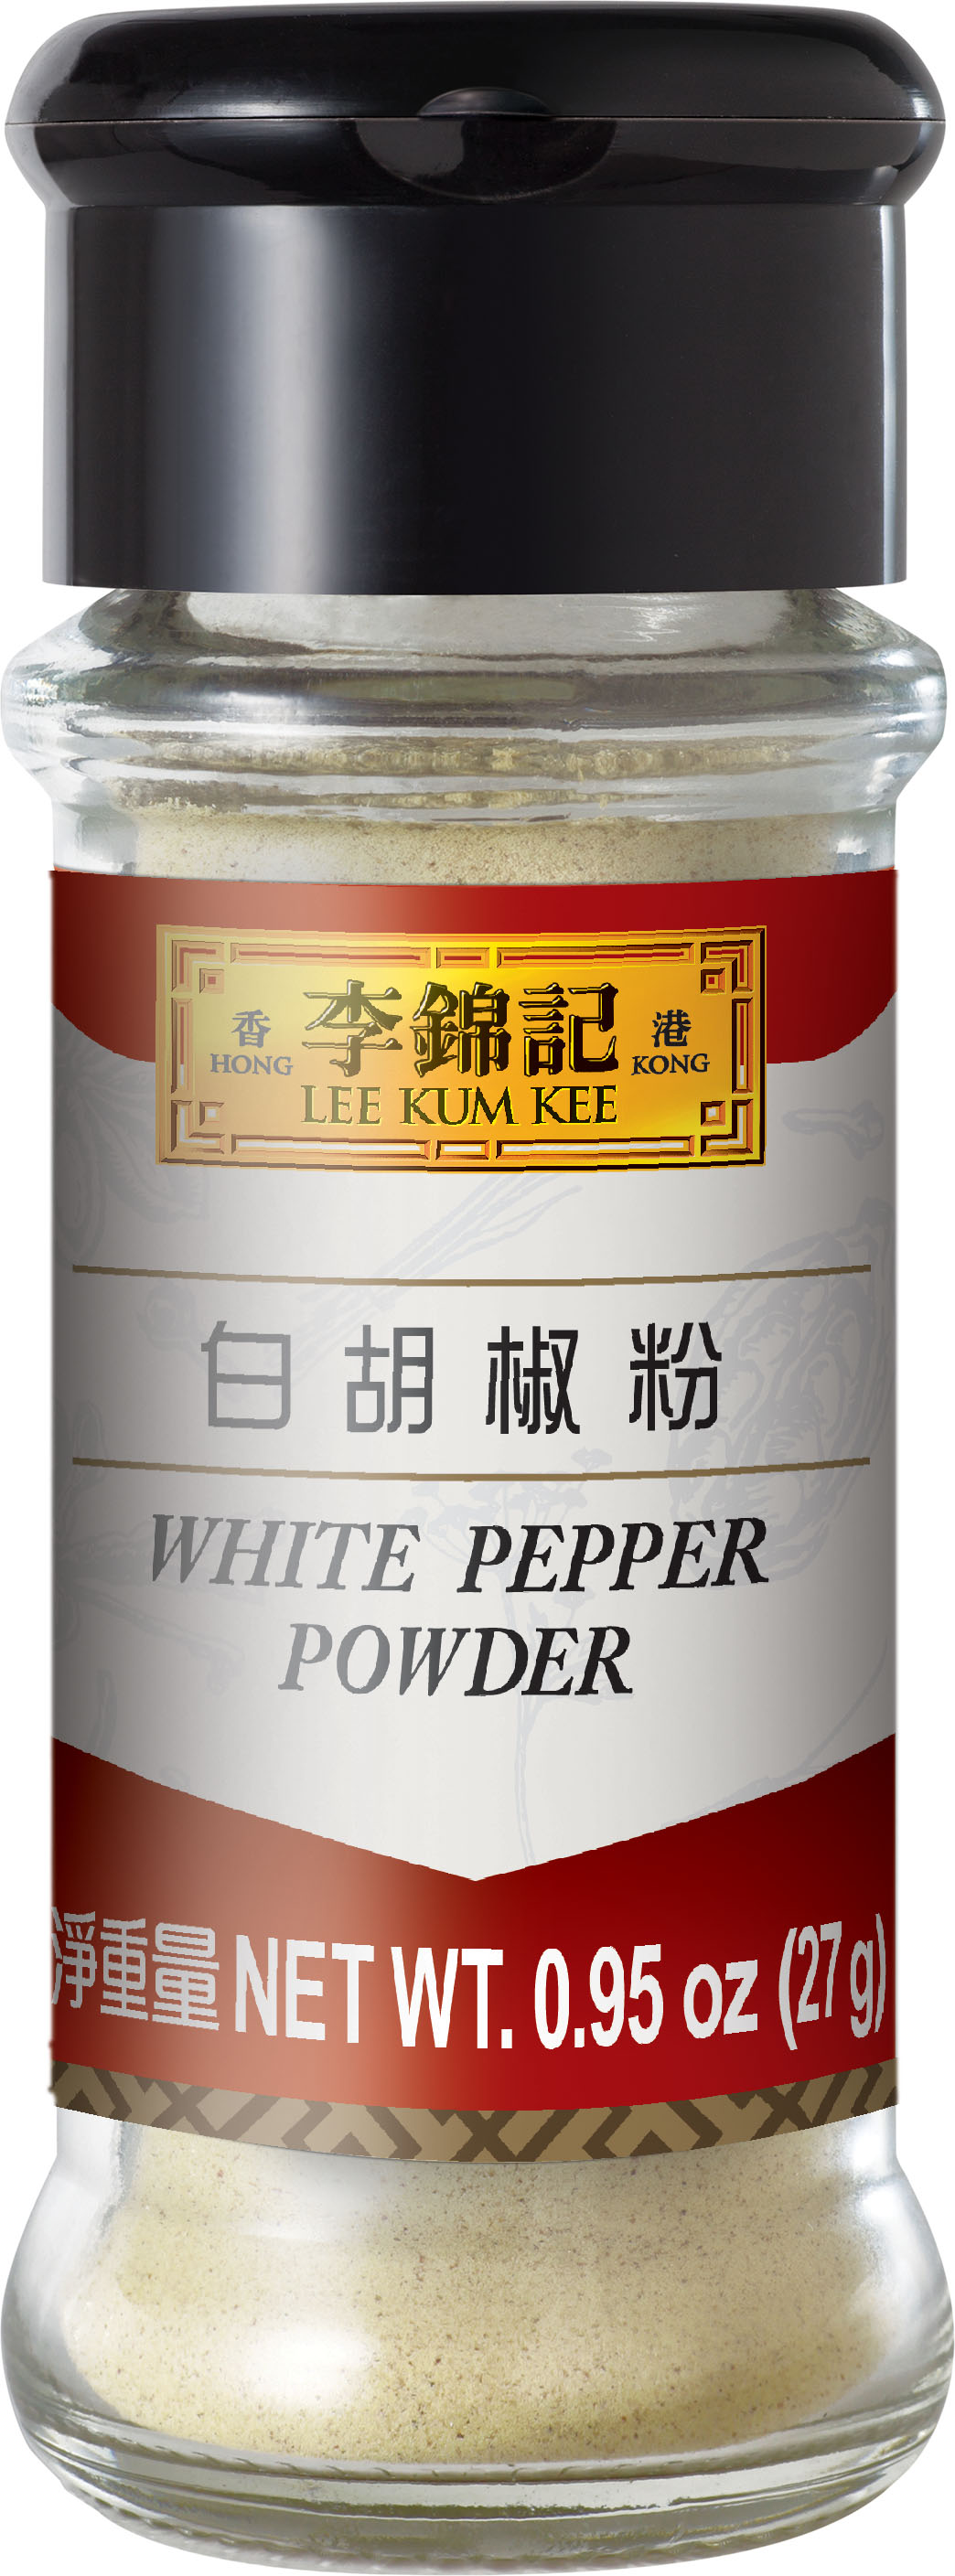 White Pepper Powder 0.95 oz (27 g), Bottle